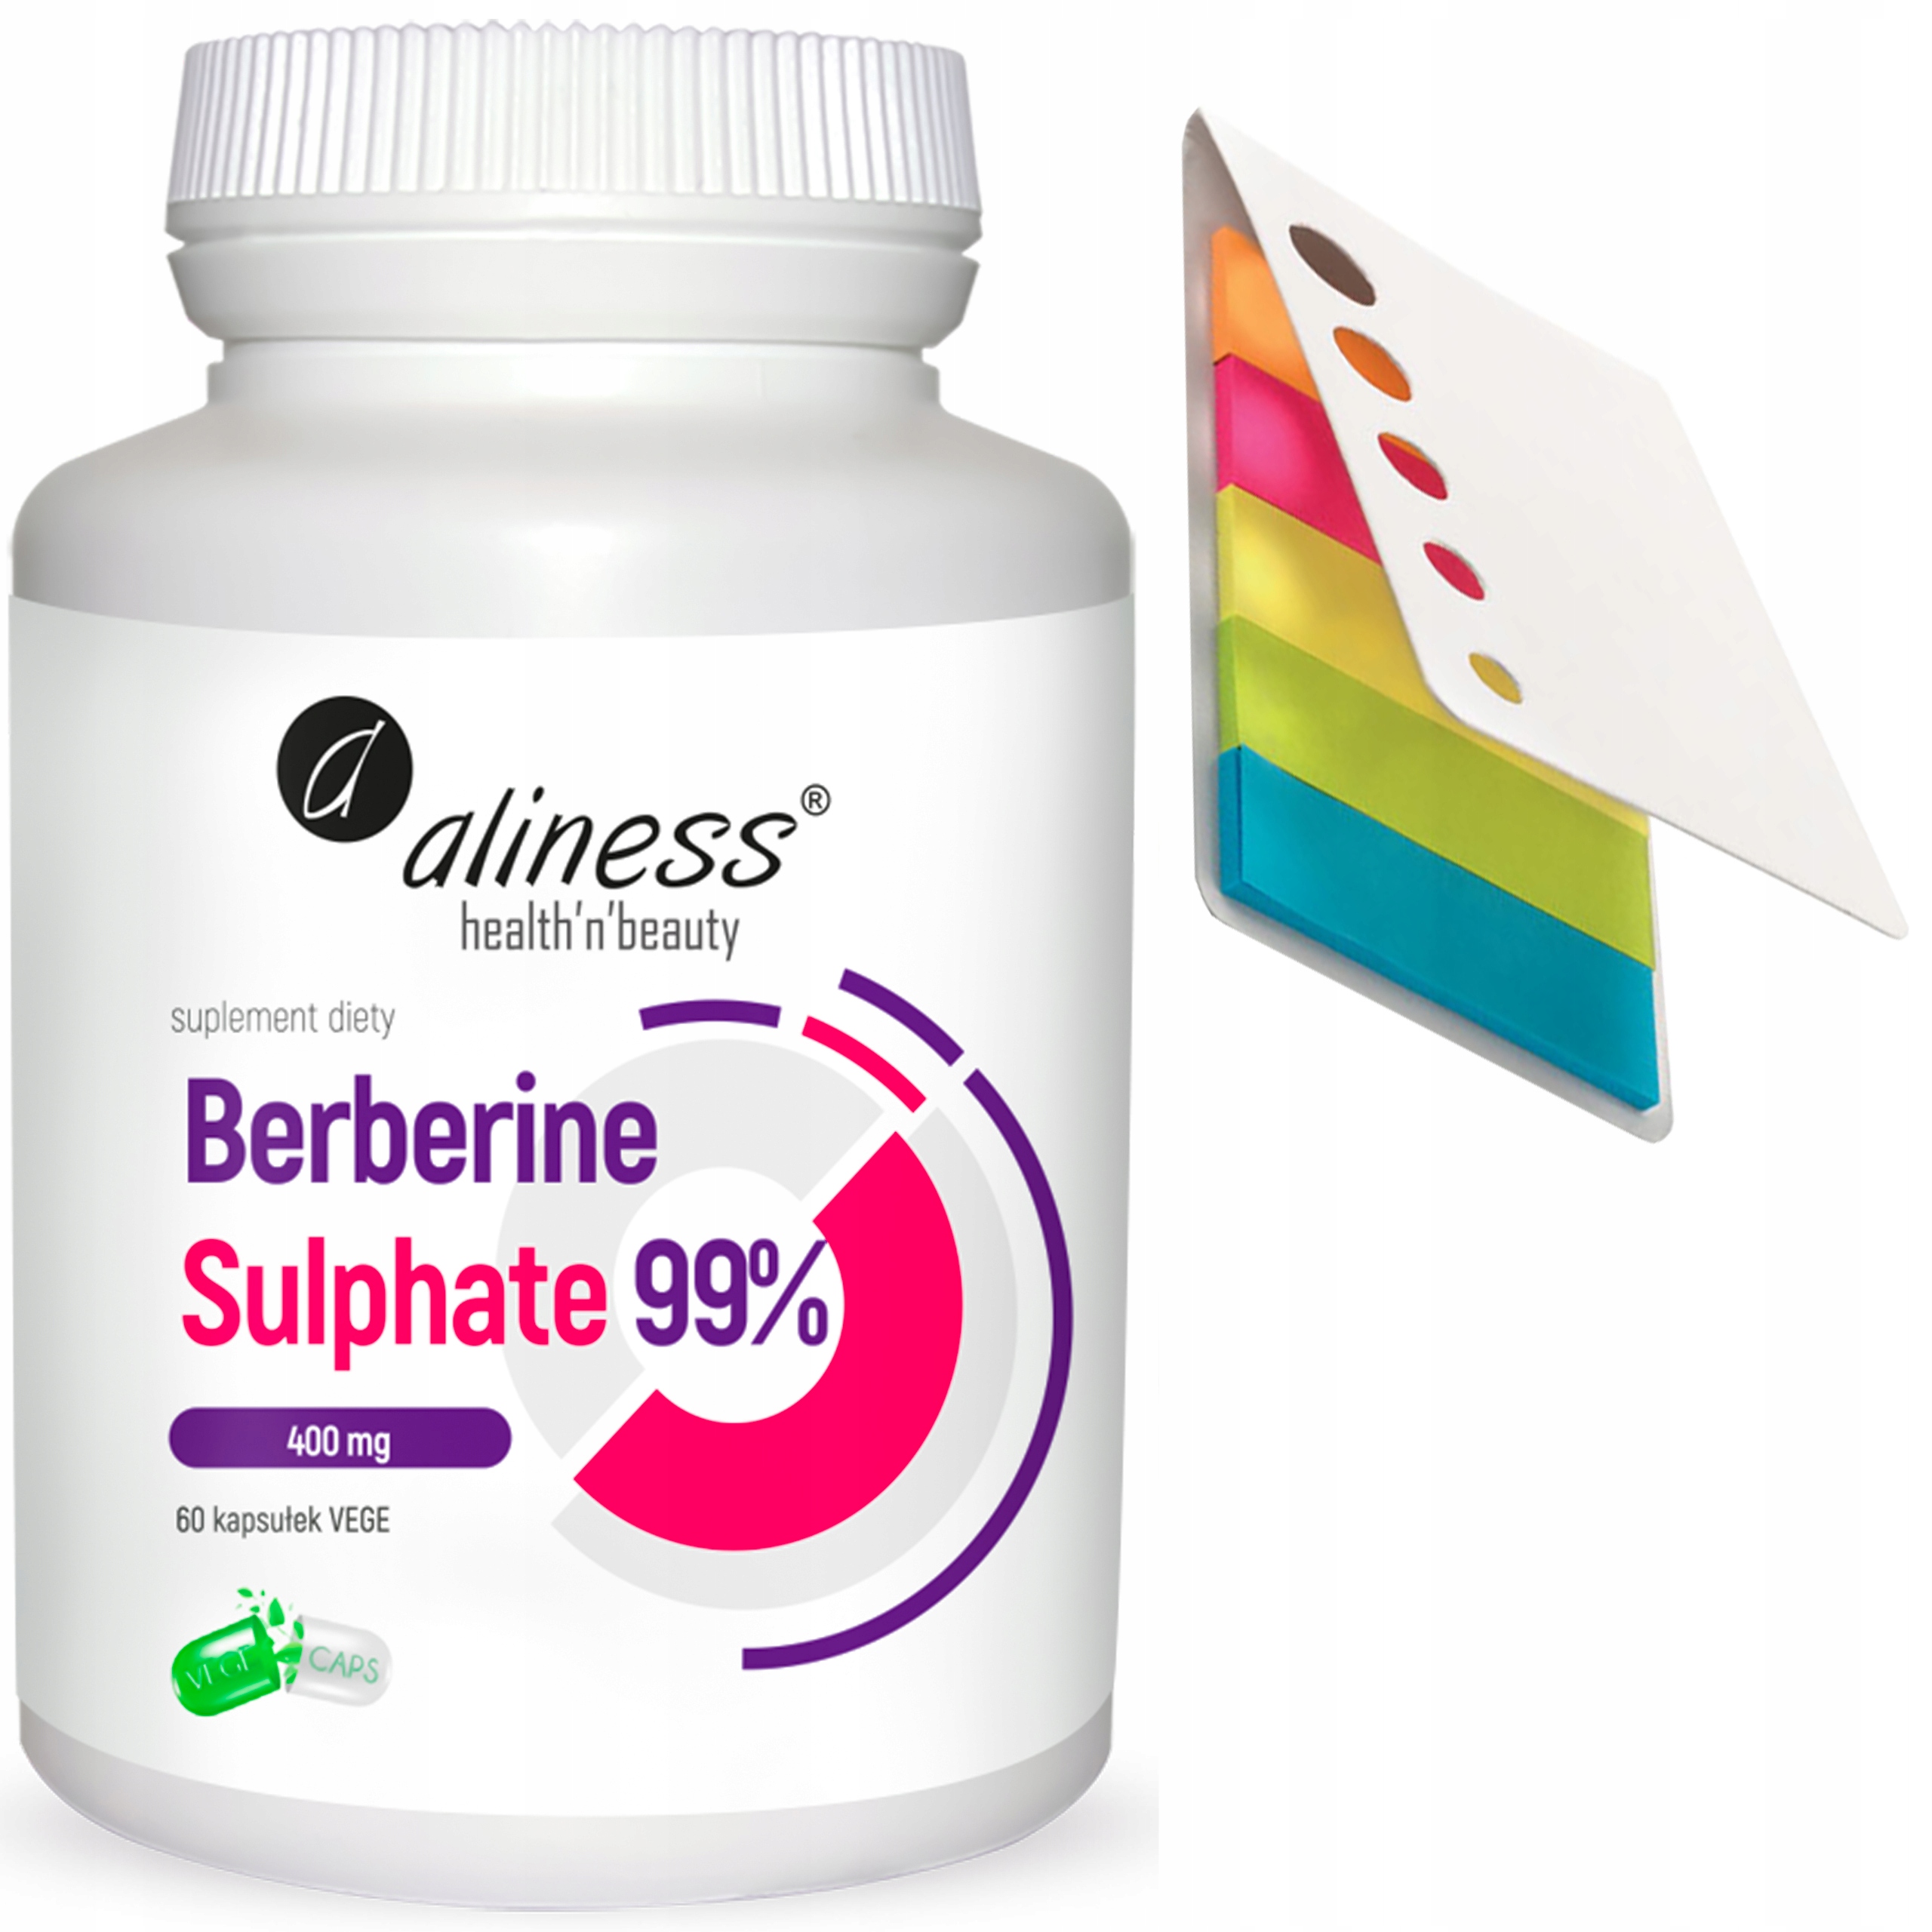 Berberine Sulphate Sulfát 99% 400 mg 60 kapsúl VEGE bez laktózy